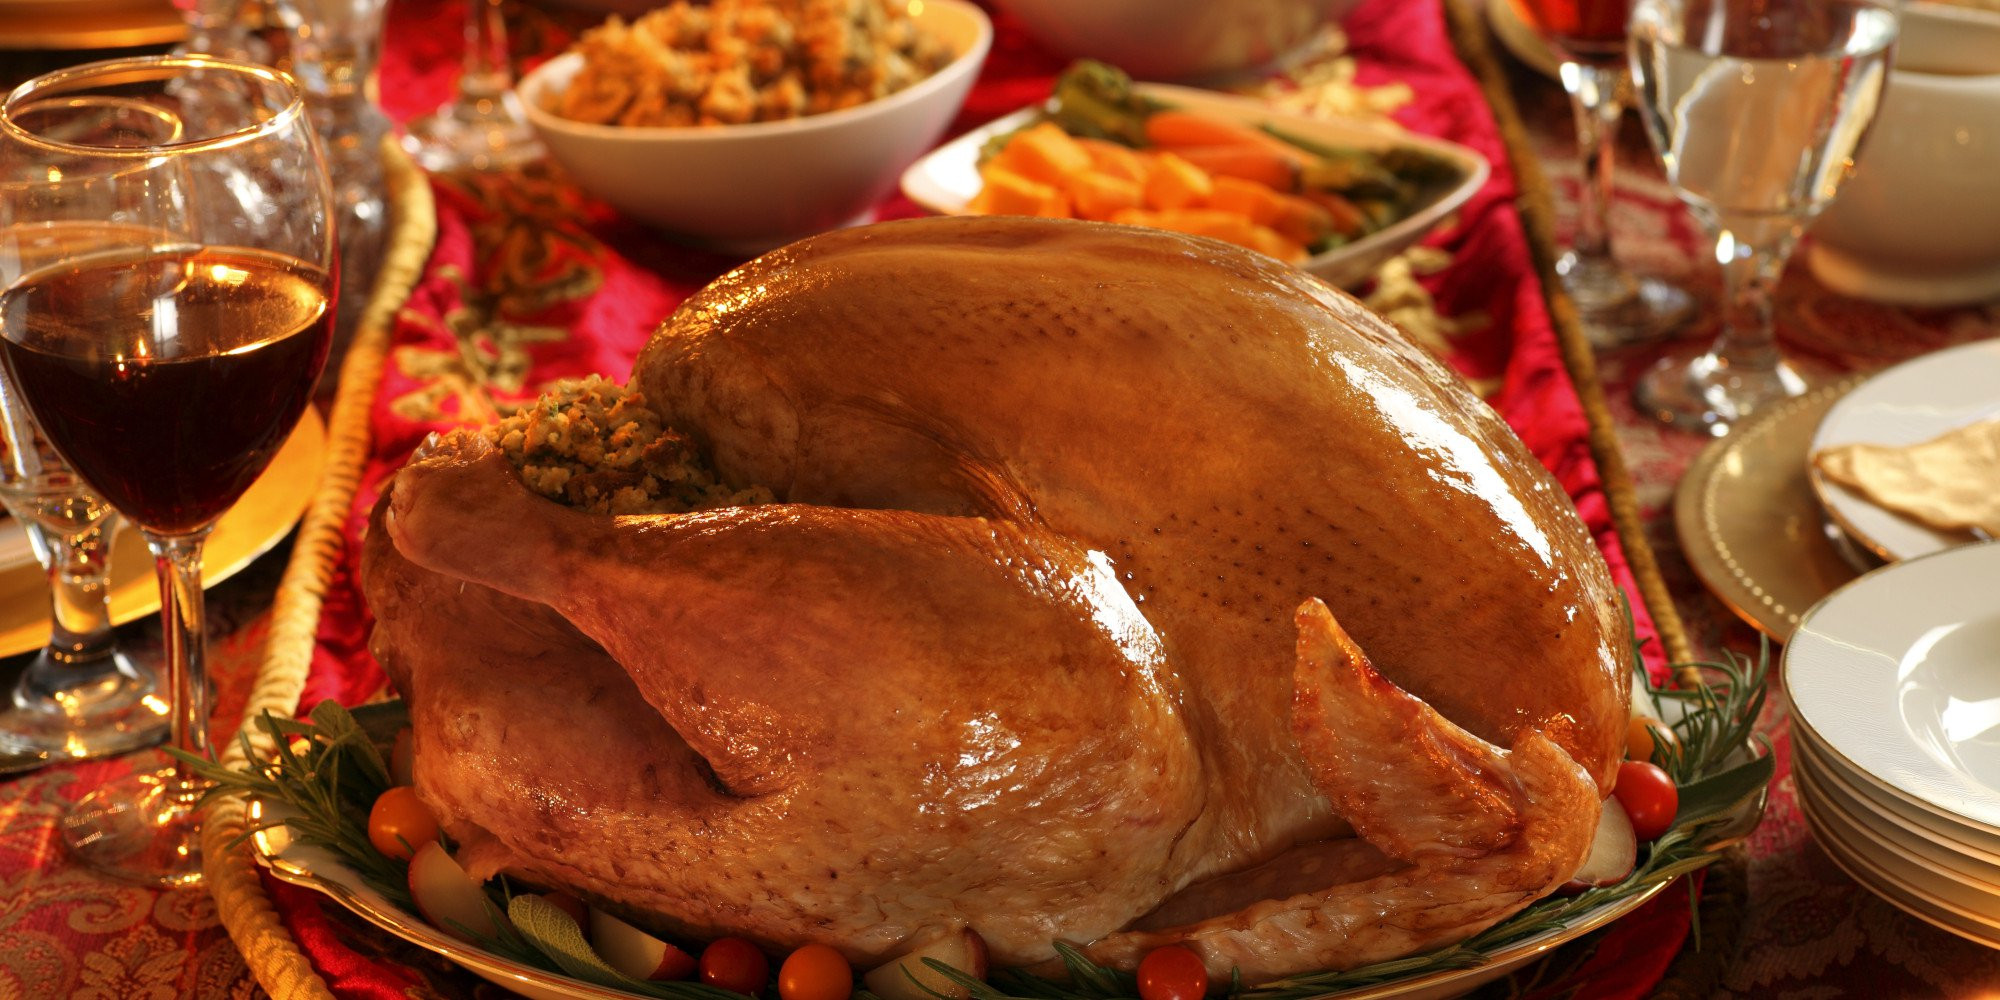 Restaurants That Serve Thanksgiving Dinner
 Can’t Cook R4L s Top 5 Restaurants Serving Thanksgiving